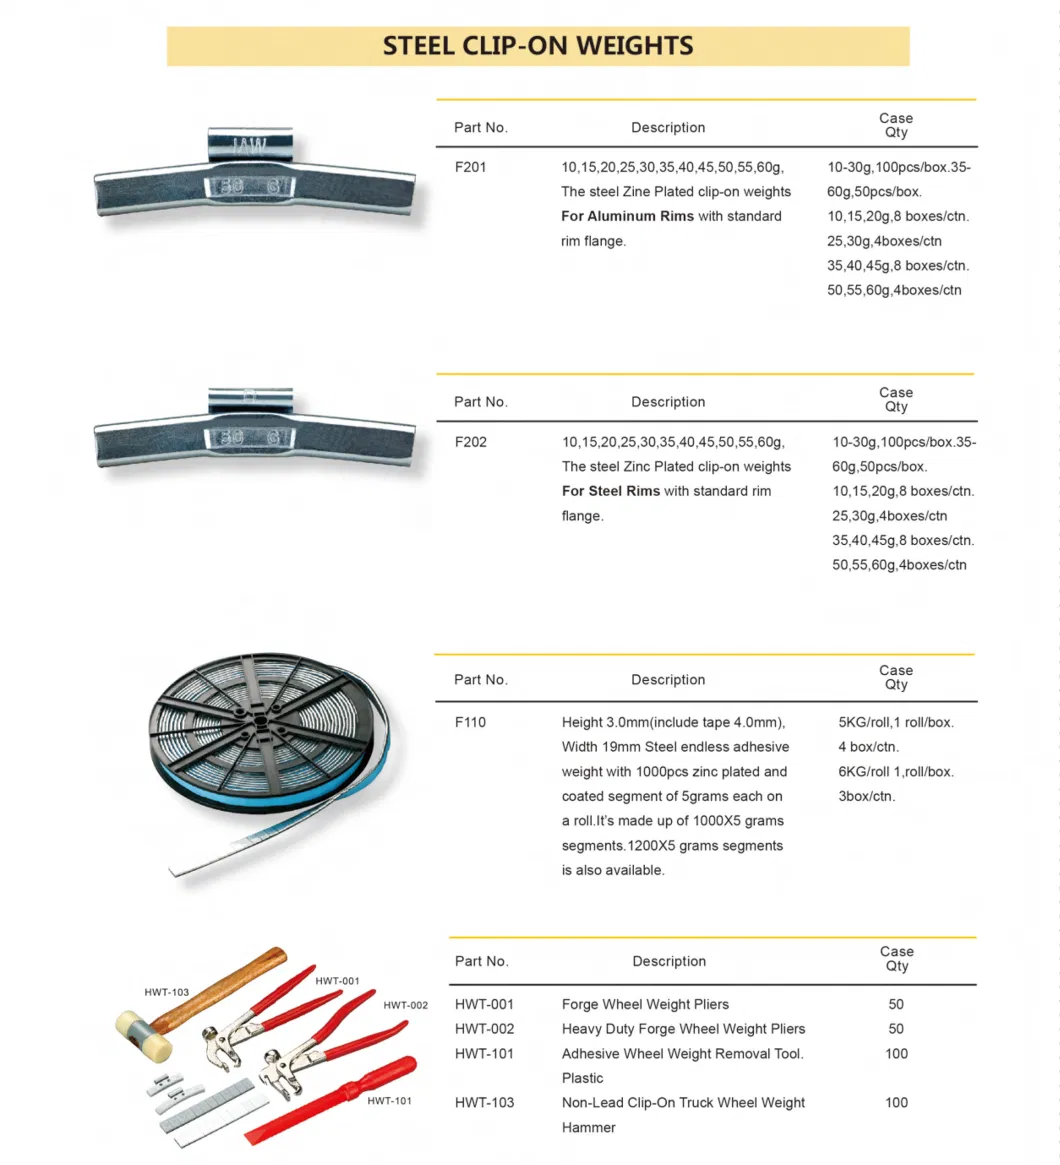 Zn/Zinc Adhesive Wheel Balance Weights Z105